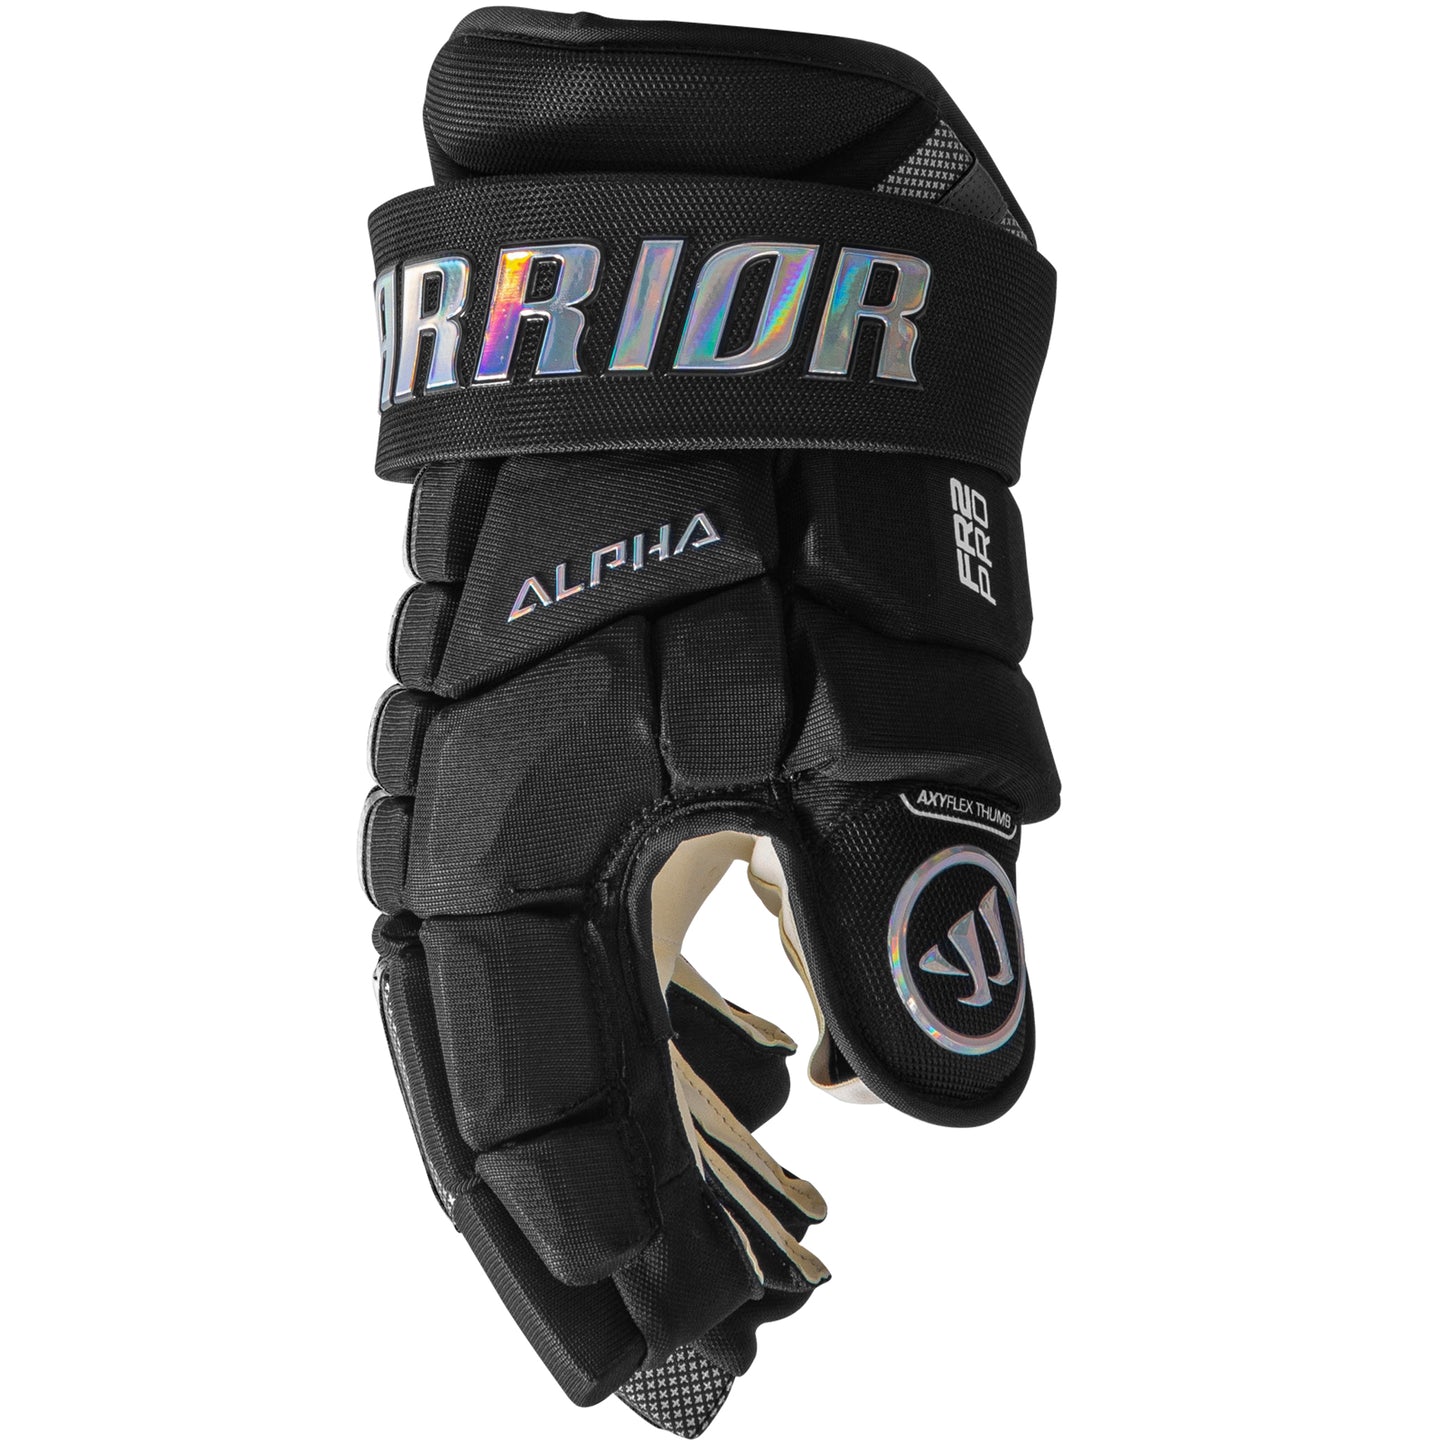 WARRIOR FR2 Pro Gloves Senior